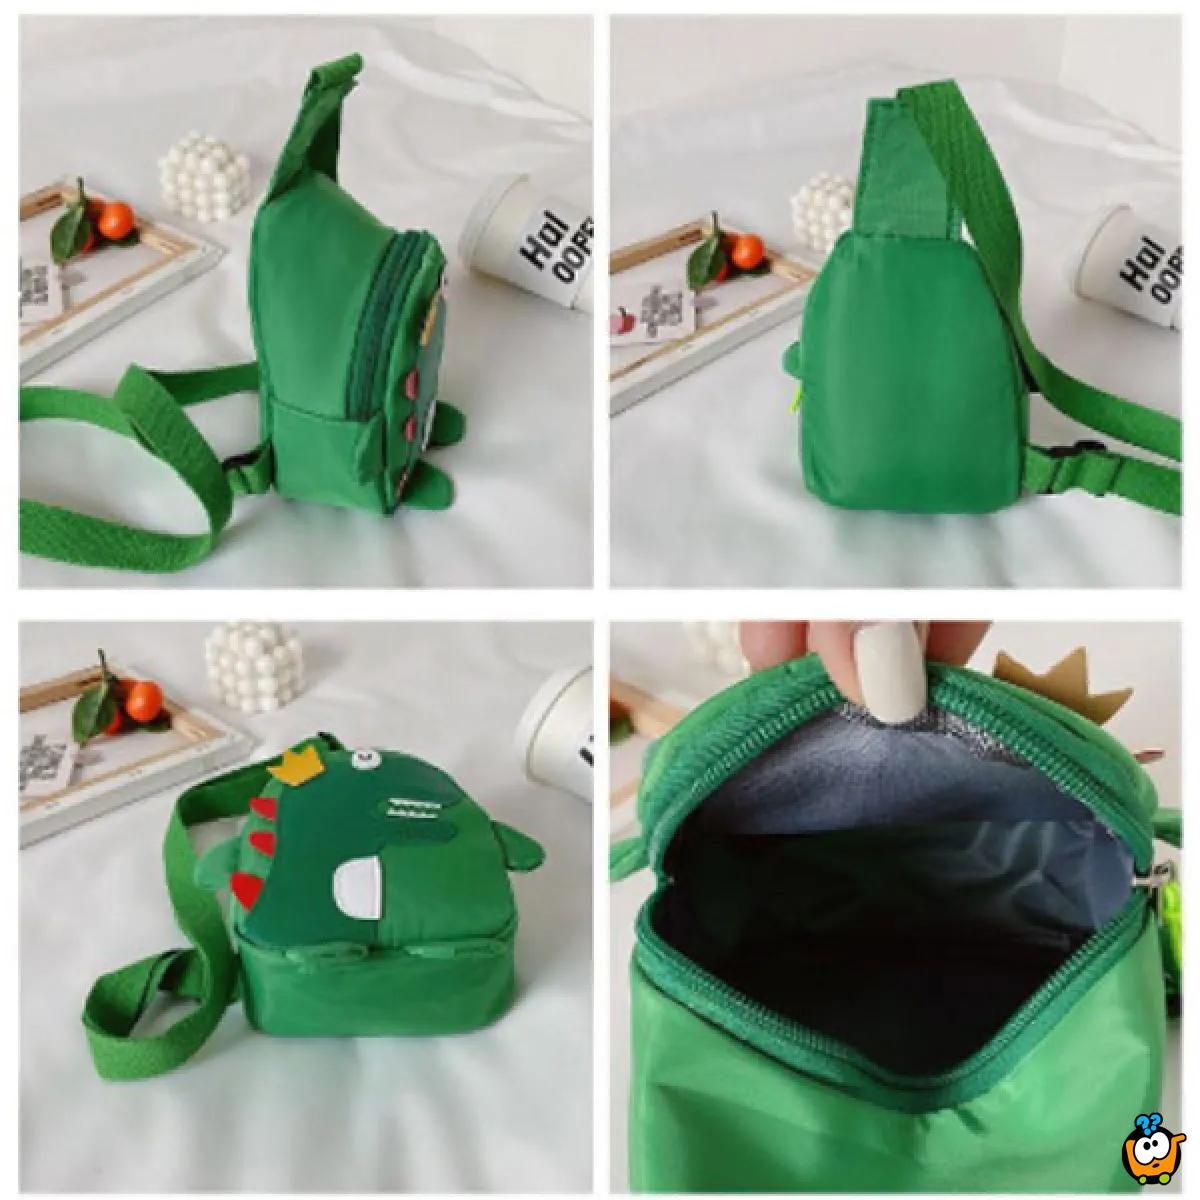 Dino backpack – Dečiji dino ranac na jedno rame